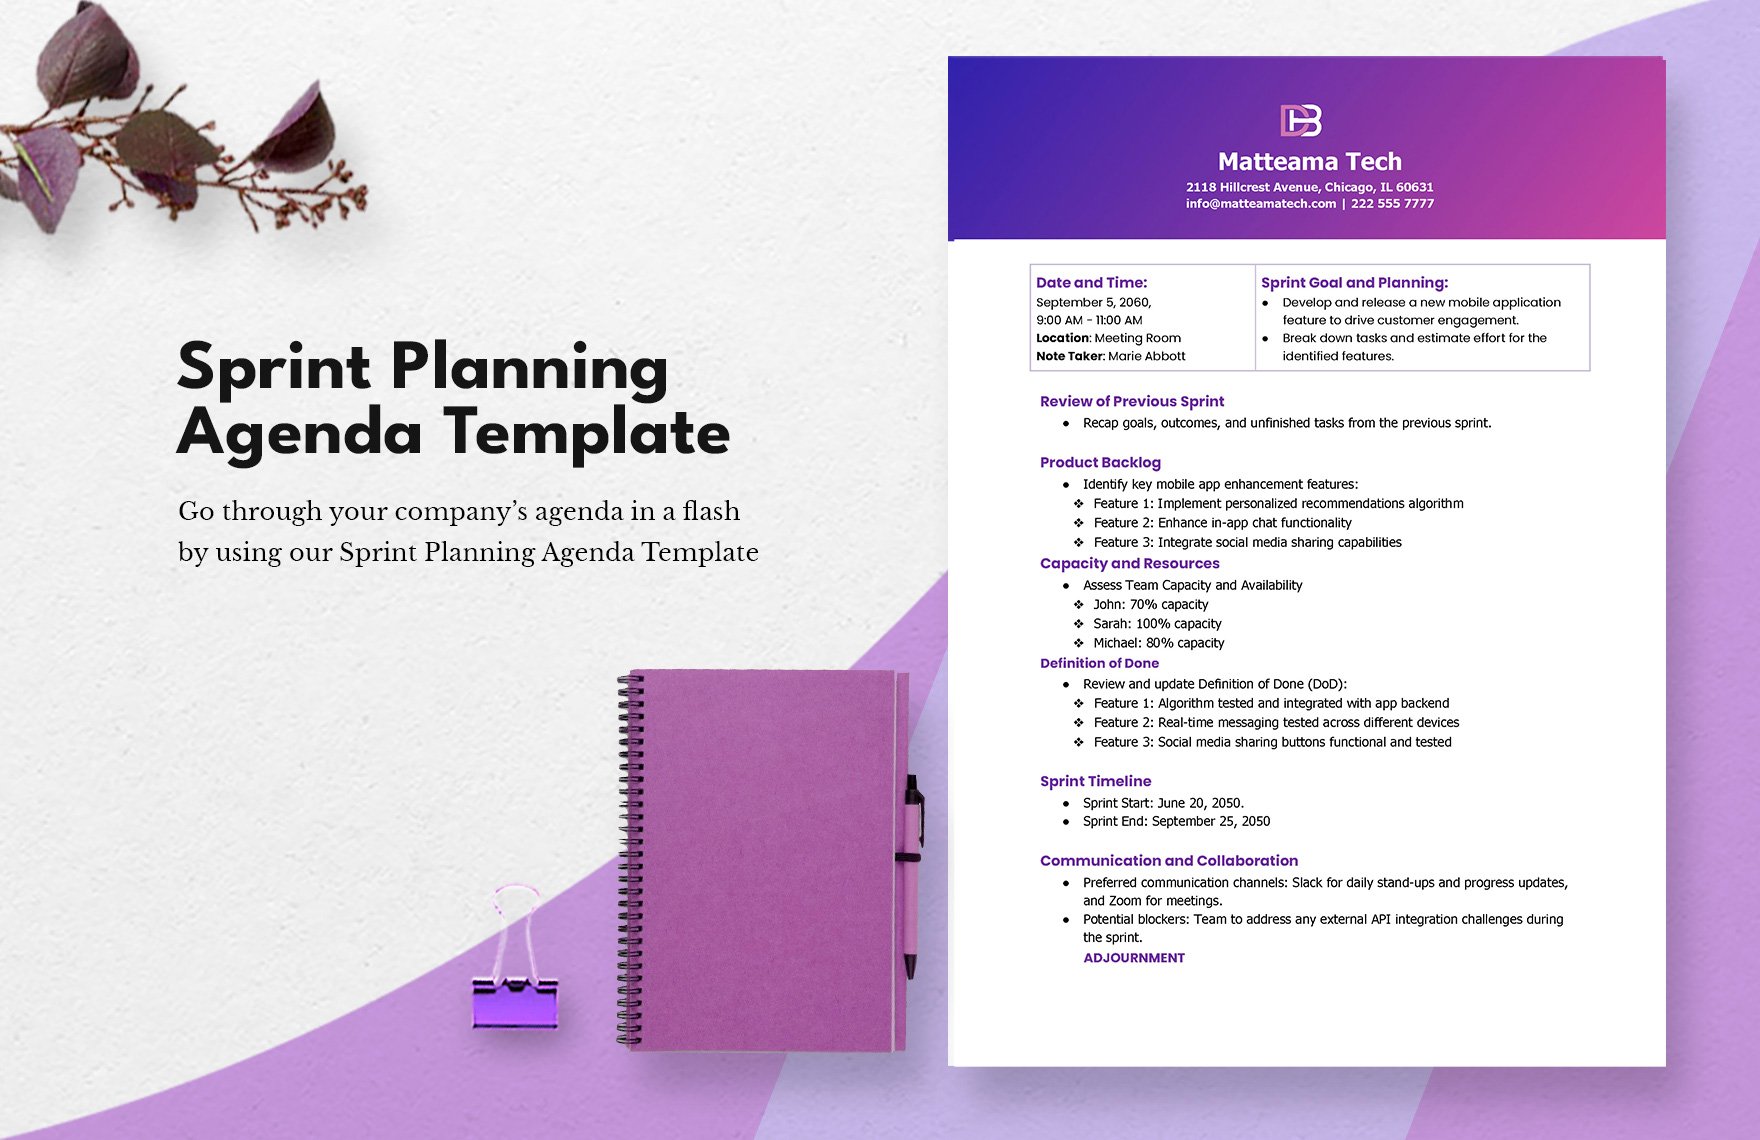 Sprint Planning Agenda Template